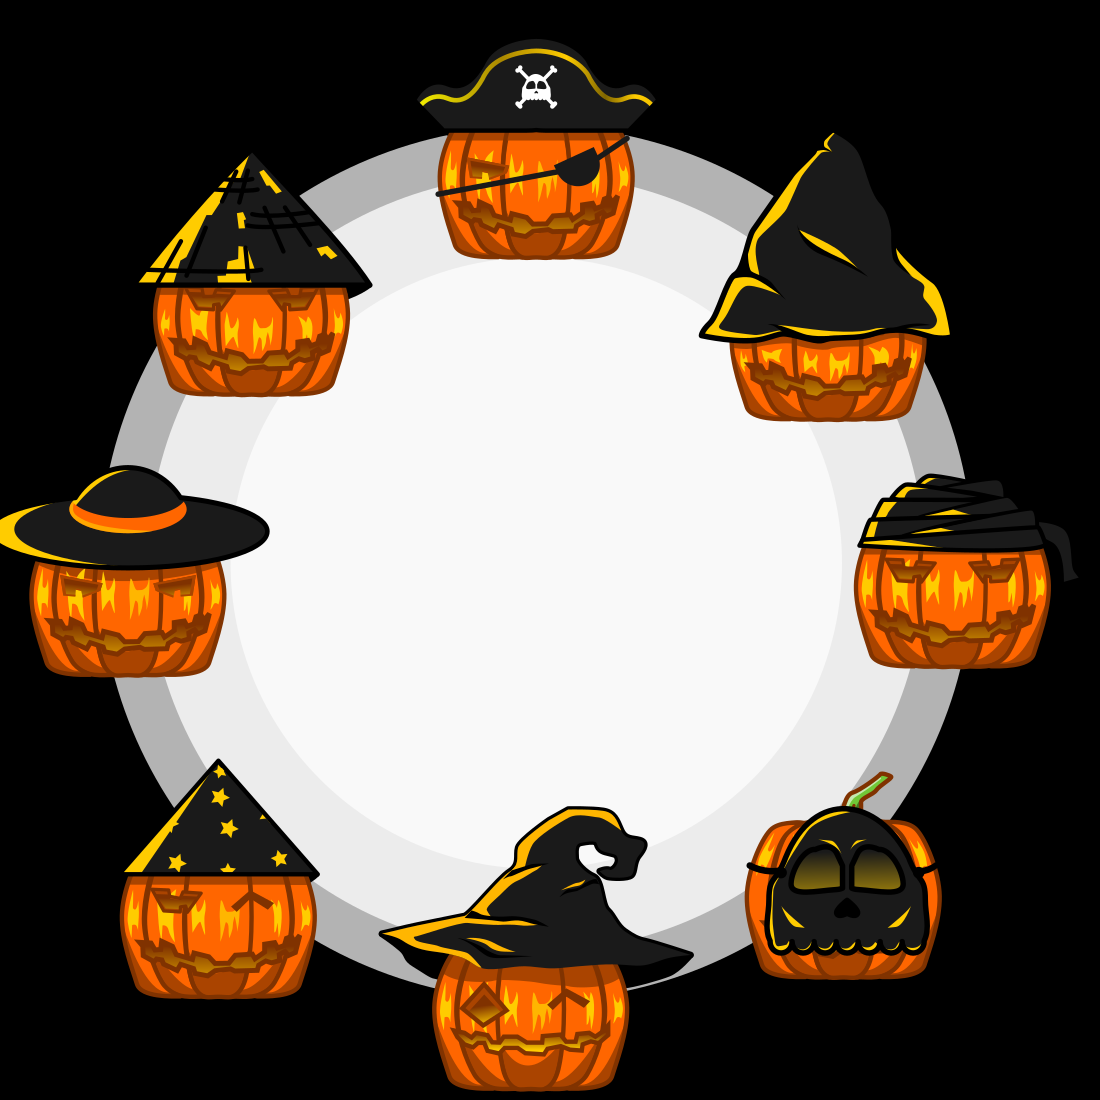 Circle image of 8 Cute Black Hat Halloween Pumkin.